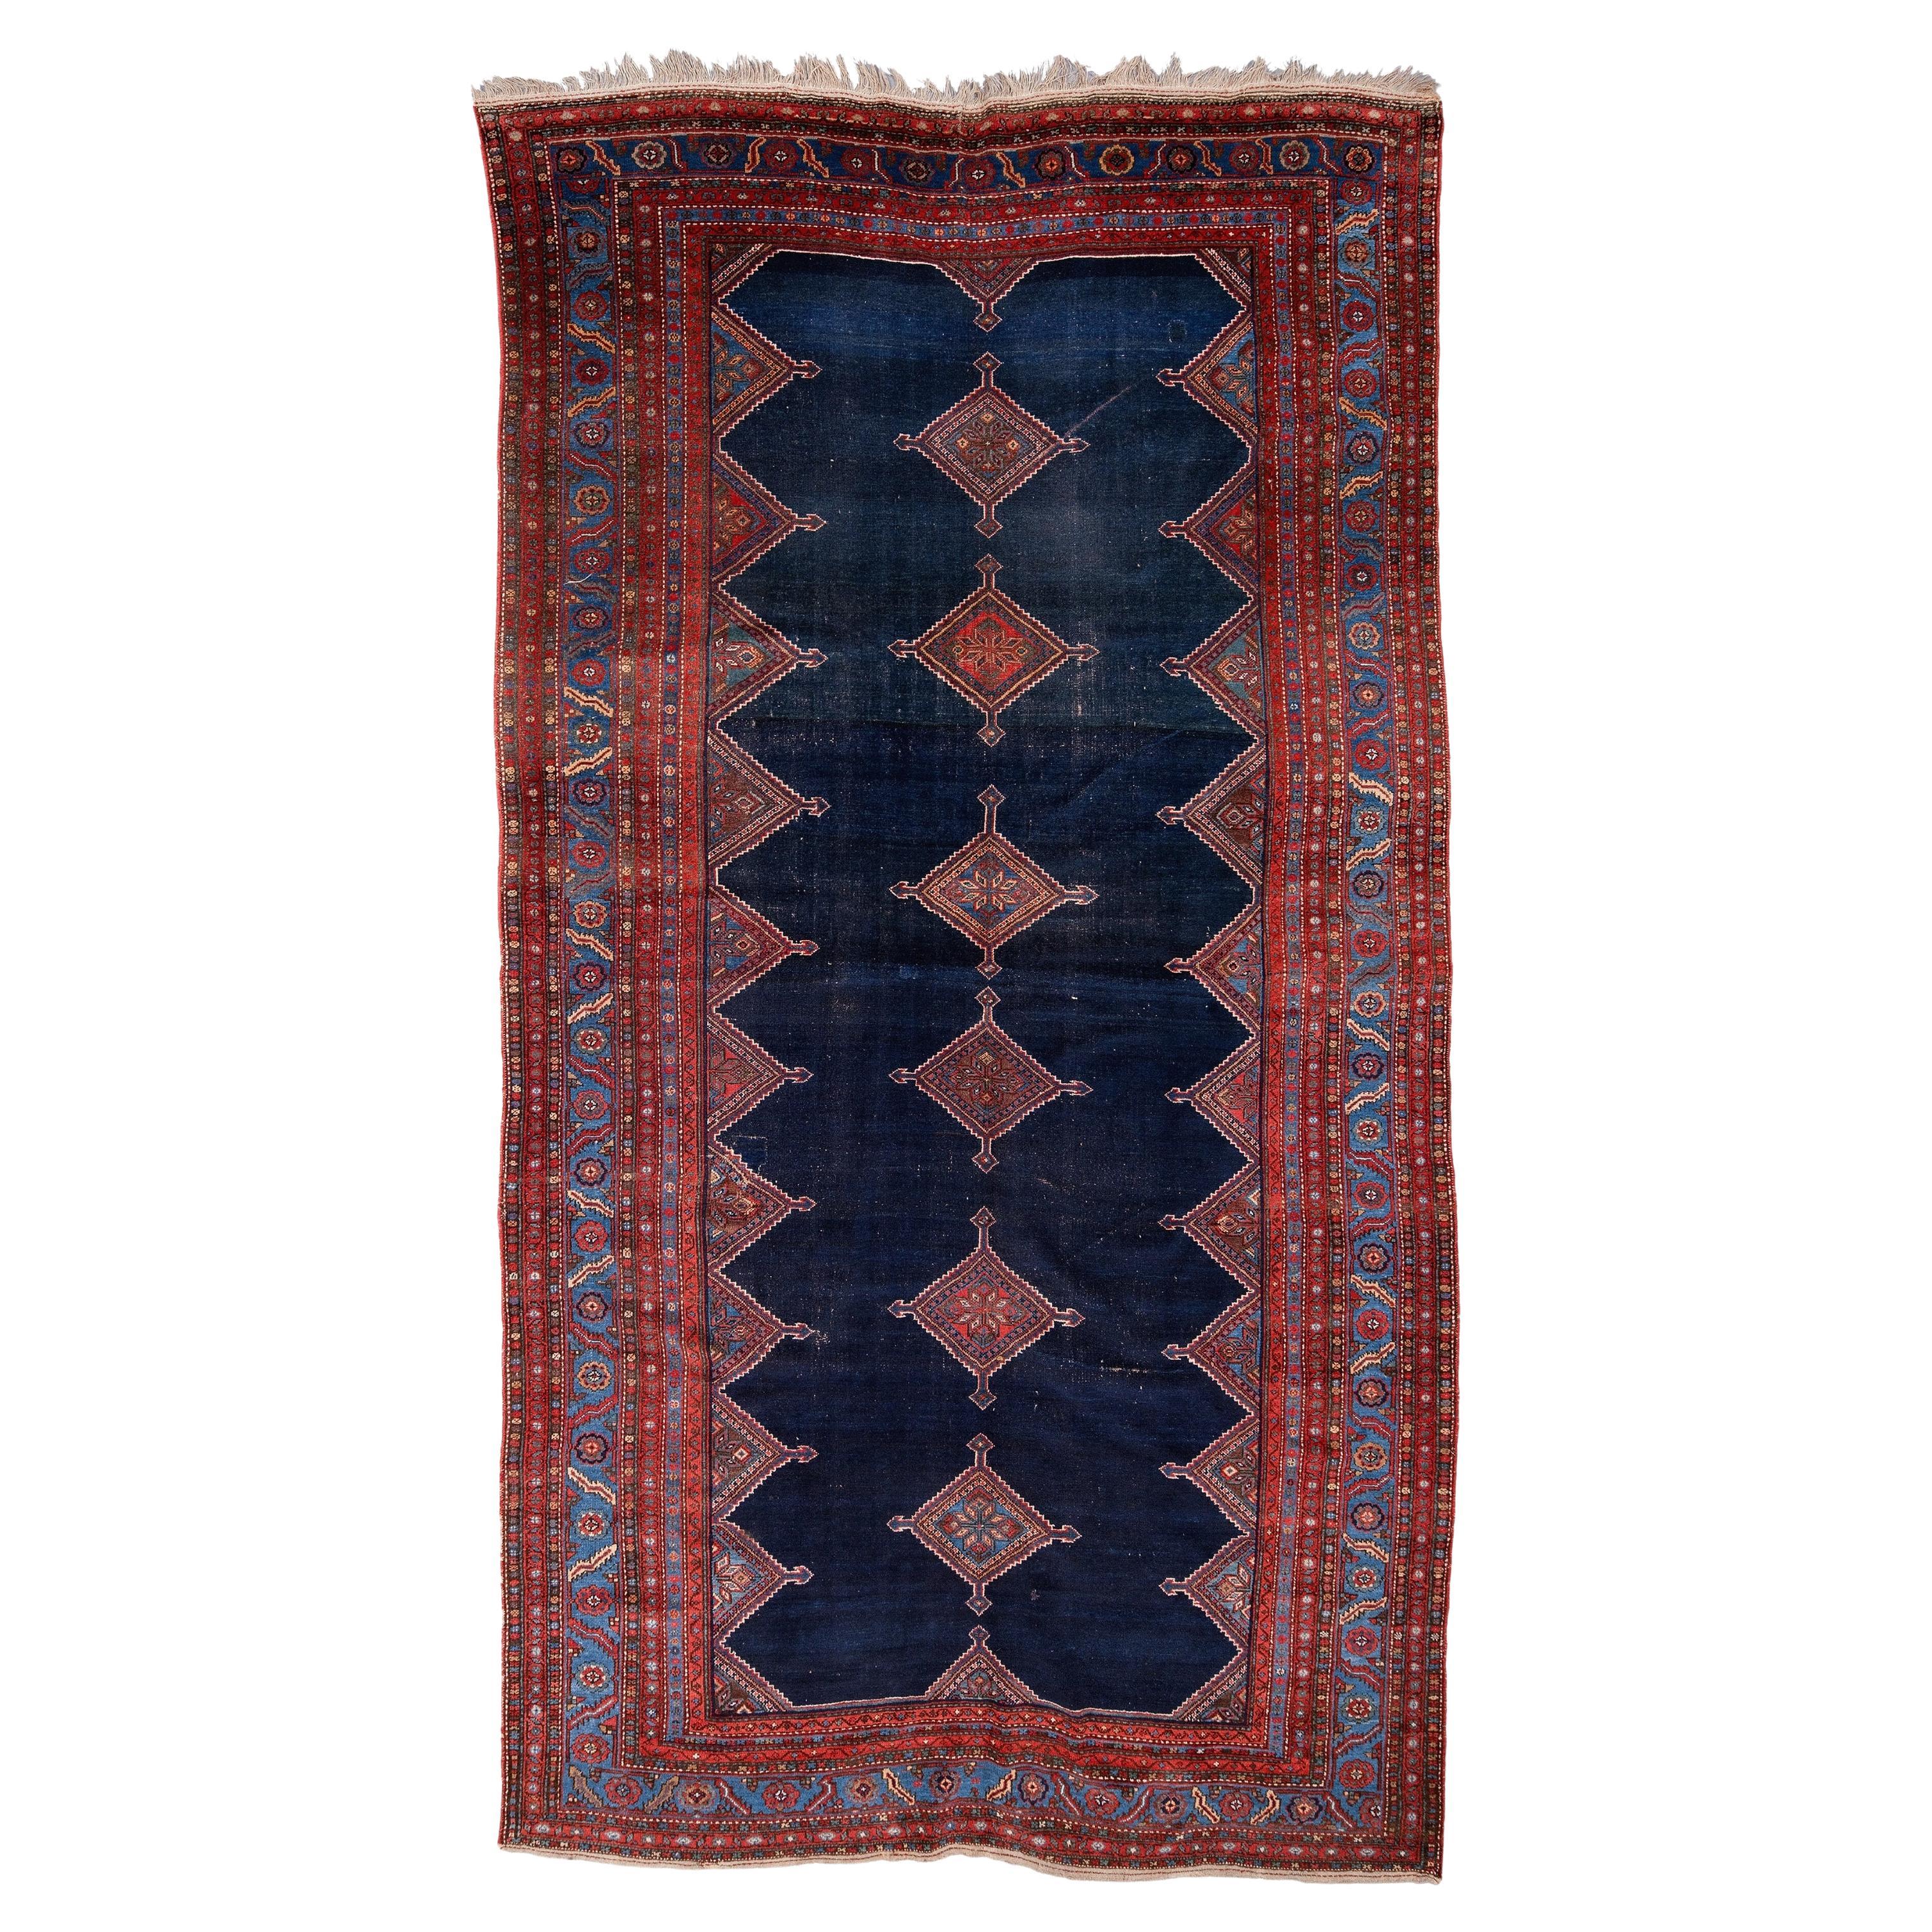 Antiker Malayer-Teppich - Malayer-Teppich aus dem 19. Jahrhundert, Vintage-Teppich, antiker Teppich